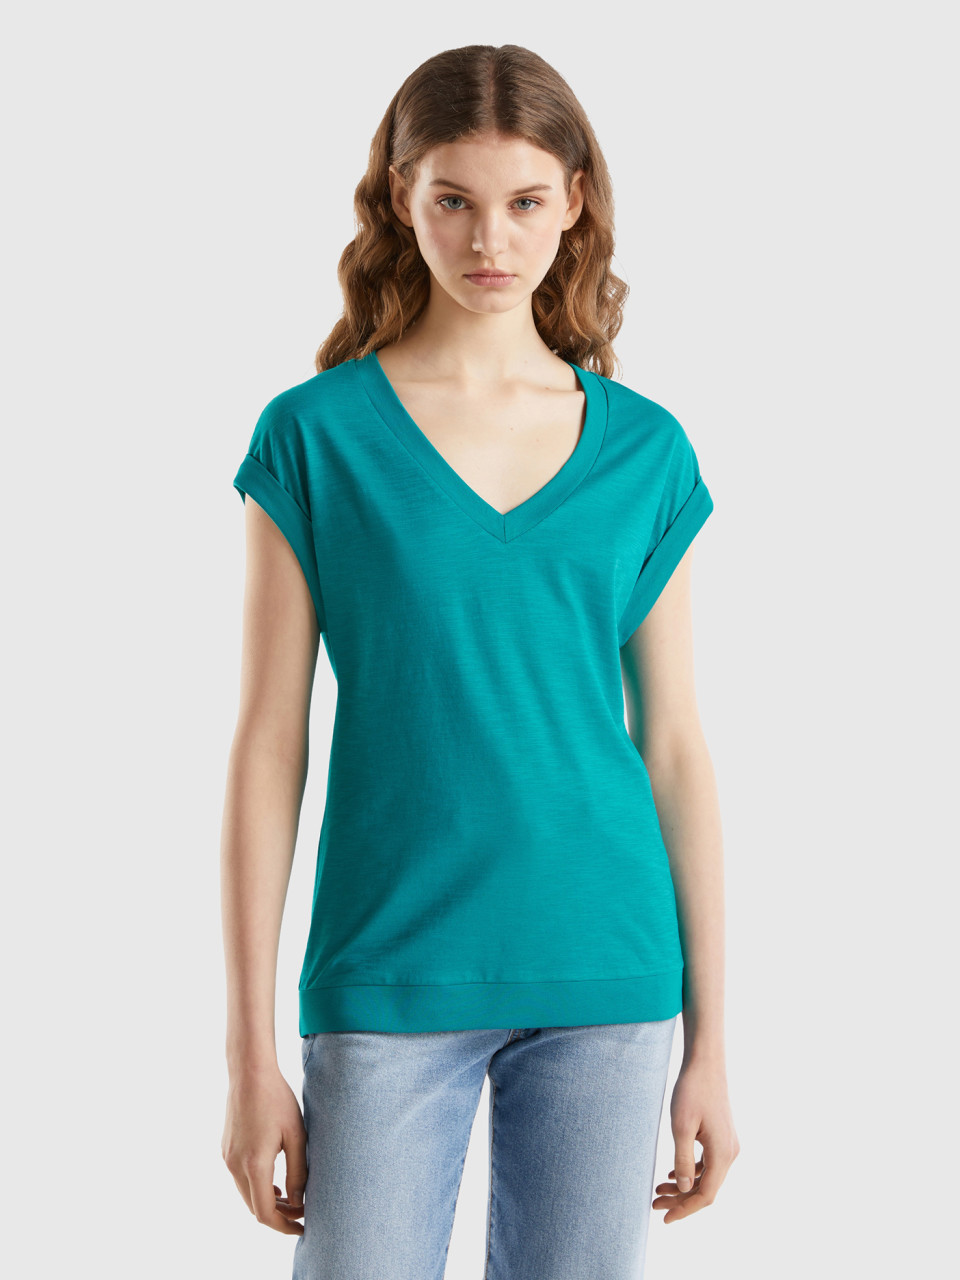 Benetton, T-shirt With V-neck, Teal, Women